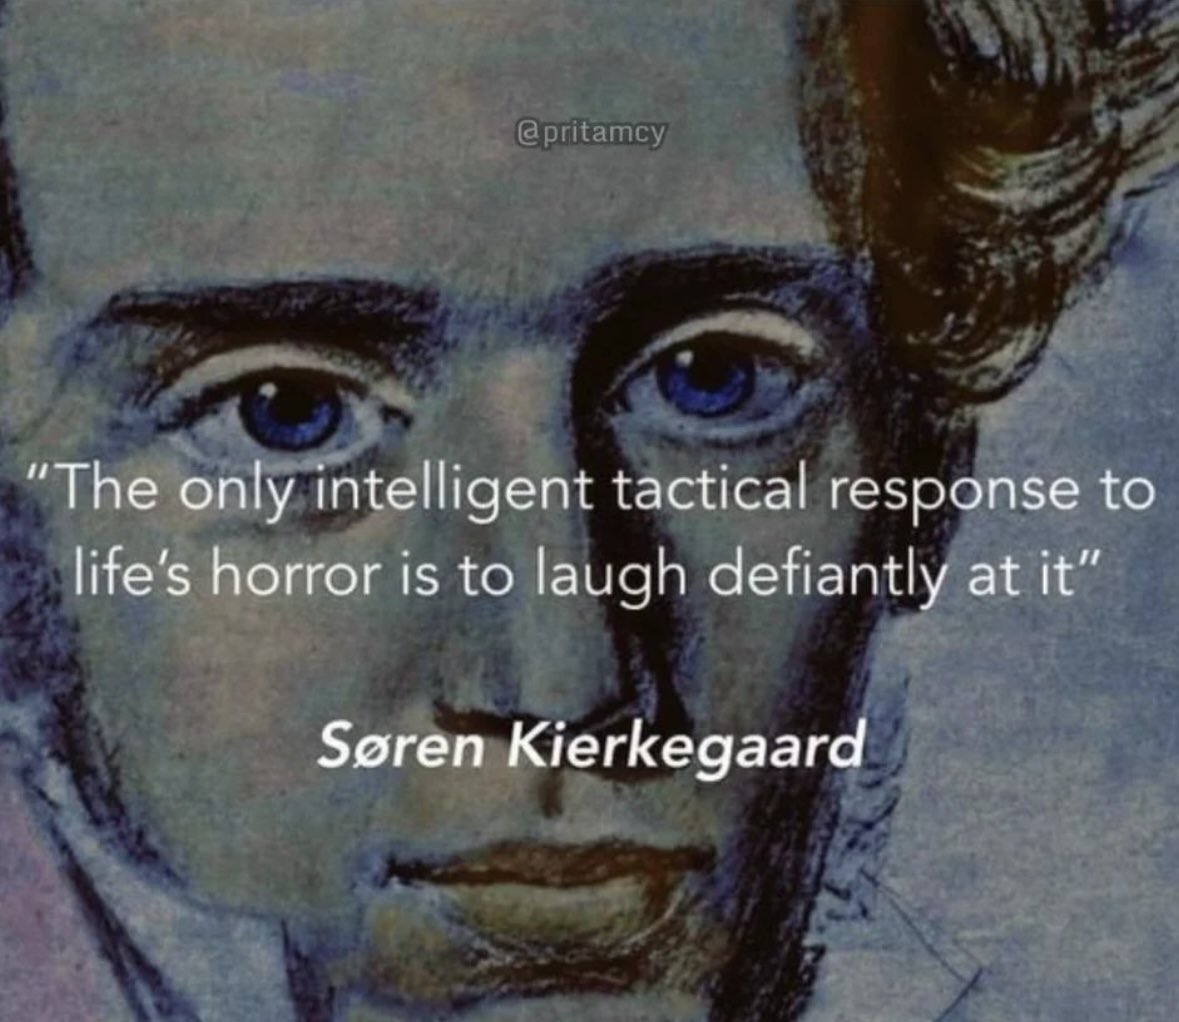 I guess Kierkegaard liked dark comedy.🤔